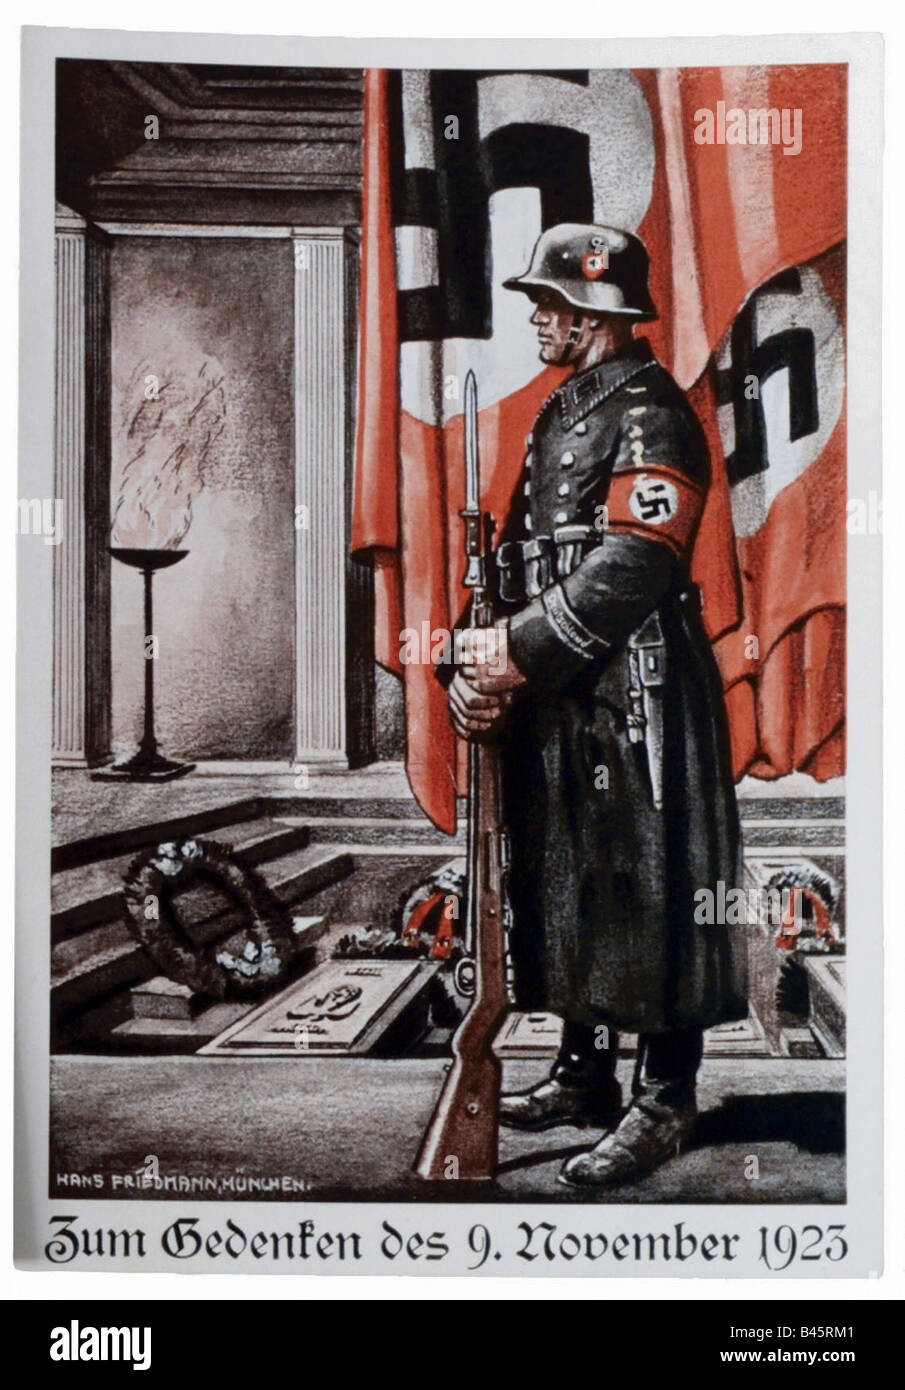 Nazism/National Socialism, propaganda, remeberance to the Beer Hall Putsch 9.11.1923, drawing by Hand Friedmann, Munich 1930s, 30s, Nazi Germany, Third Reich, , Stock Photo